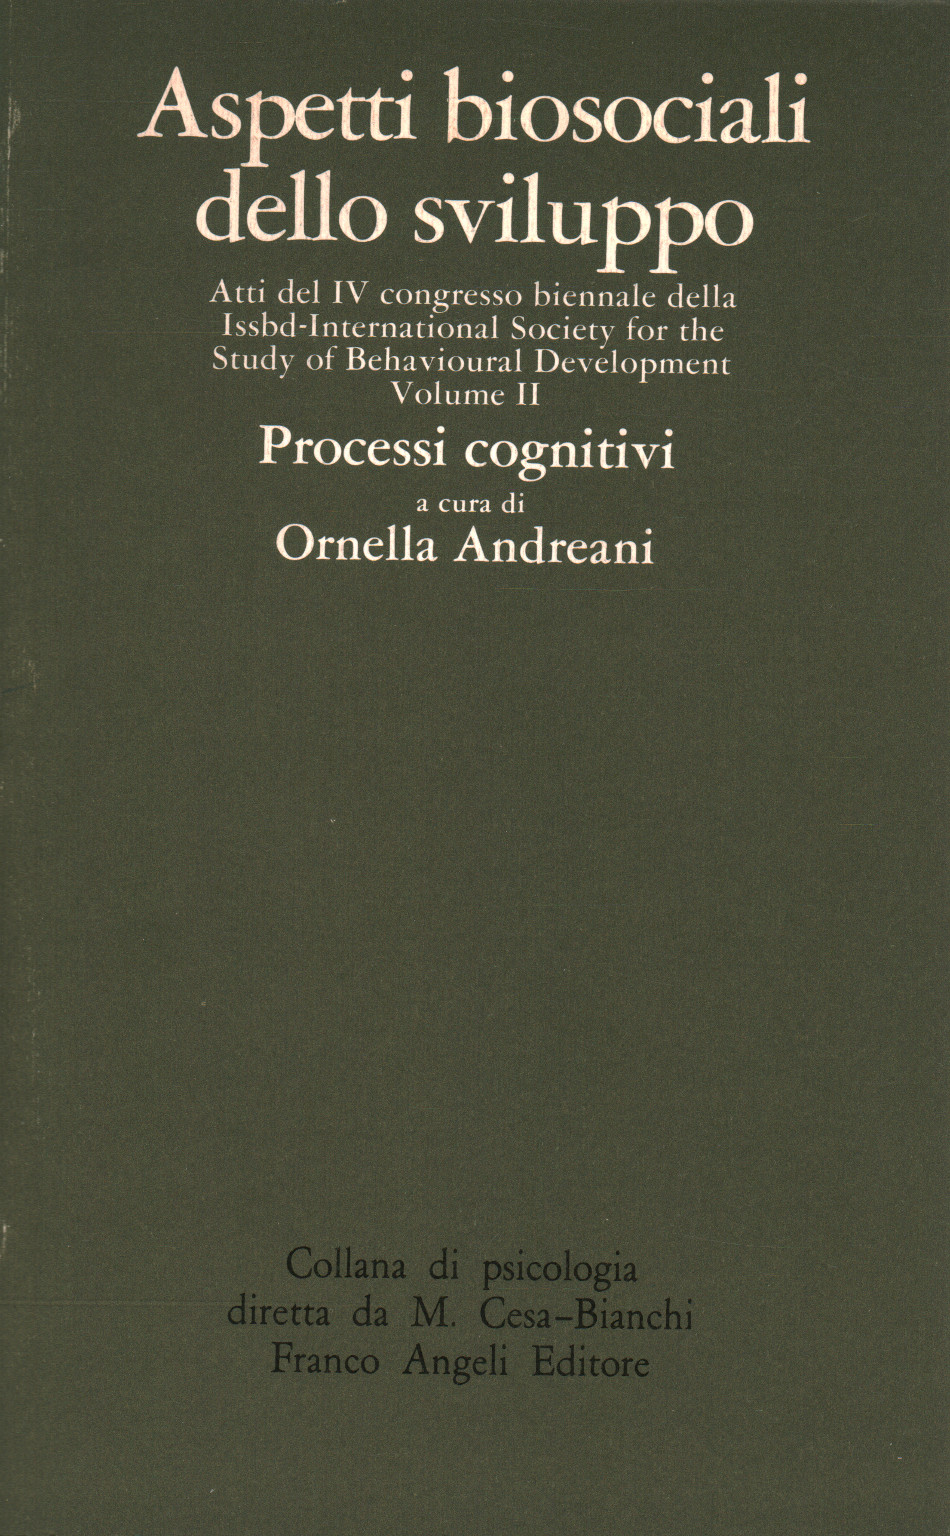 Aspects of biosocial development. Vol. II: Proces, s.a.